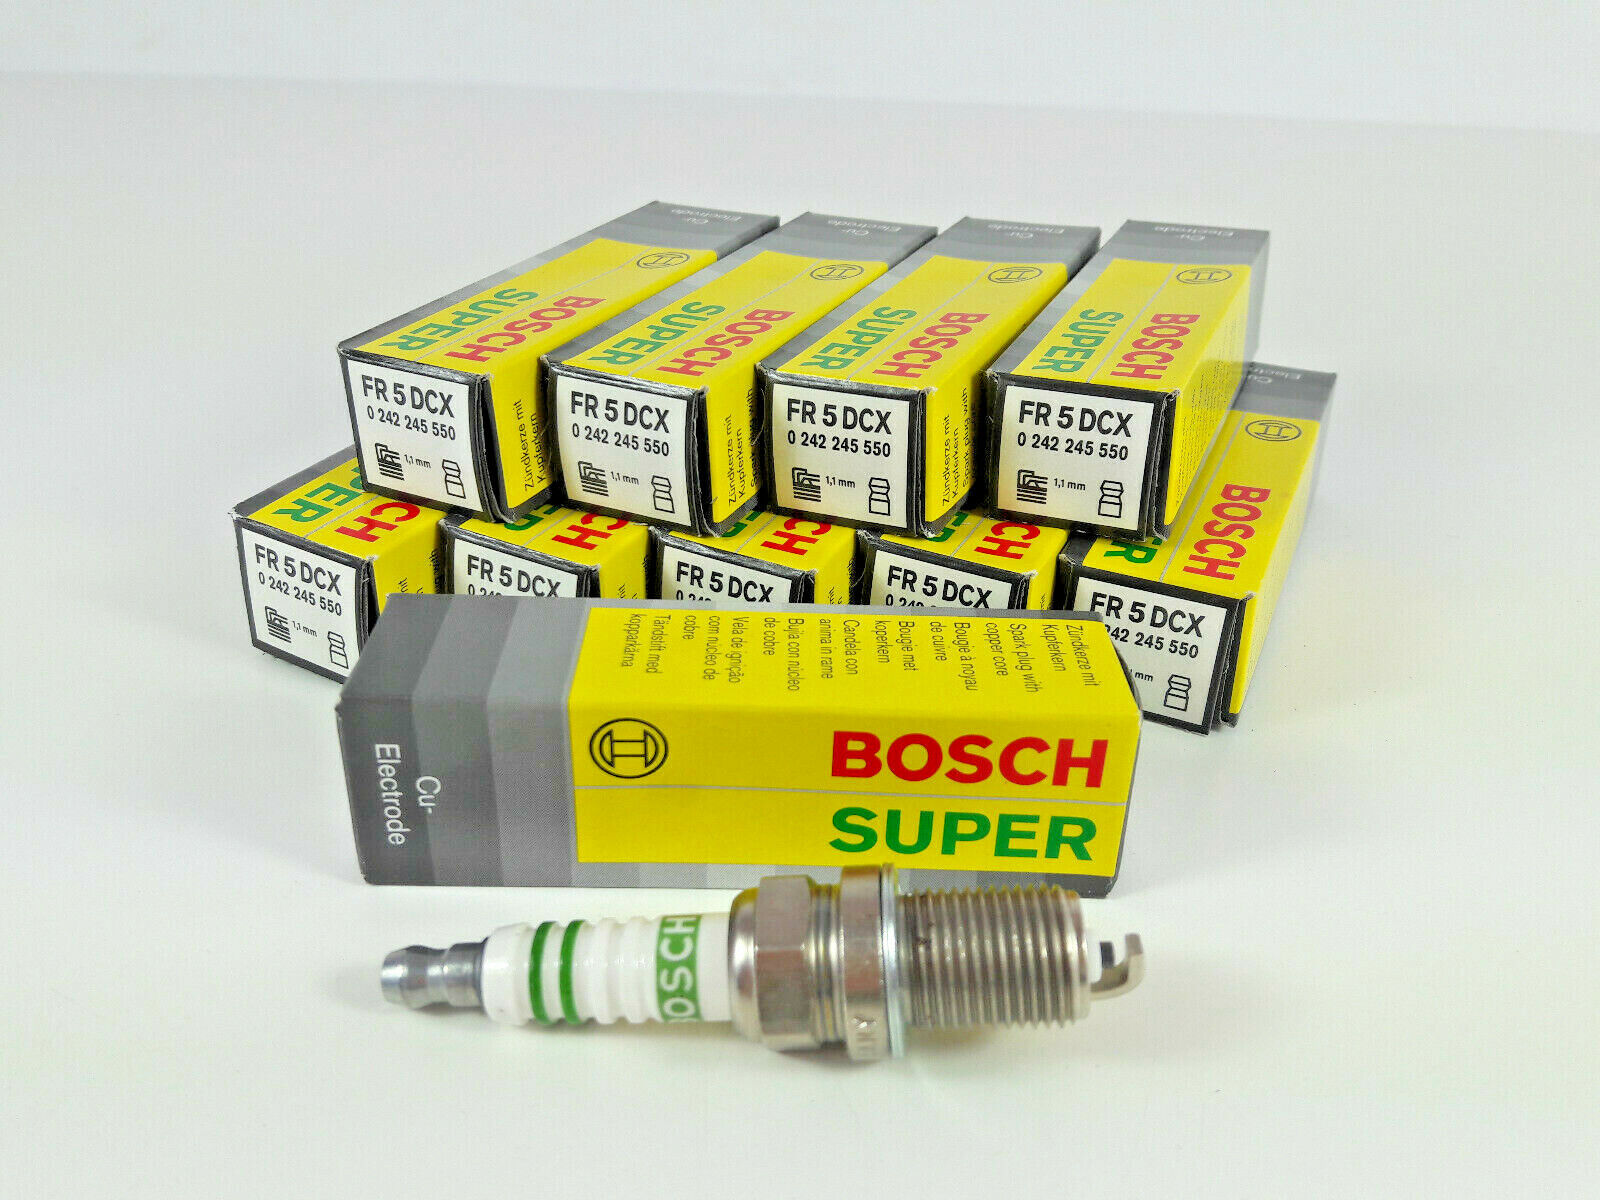 1x BOSCH Spark Plug FR5DCX 0242245550 SUPER 1,1mm GAP